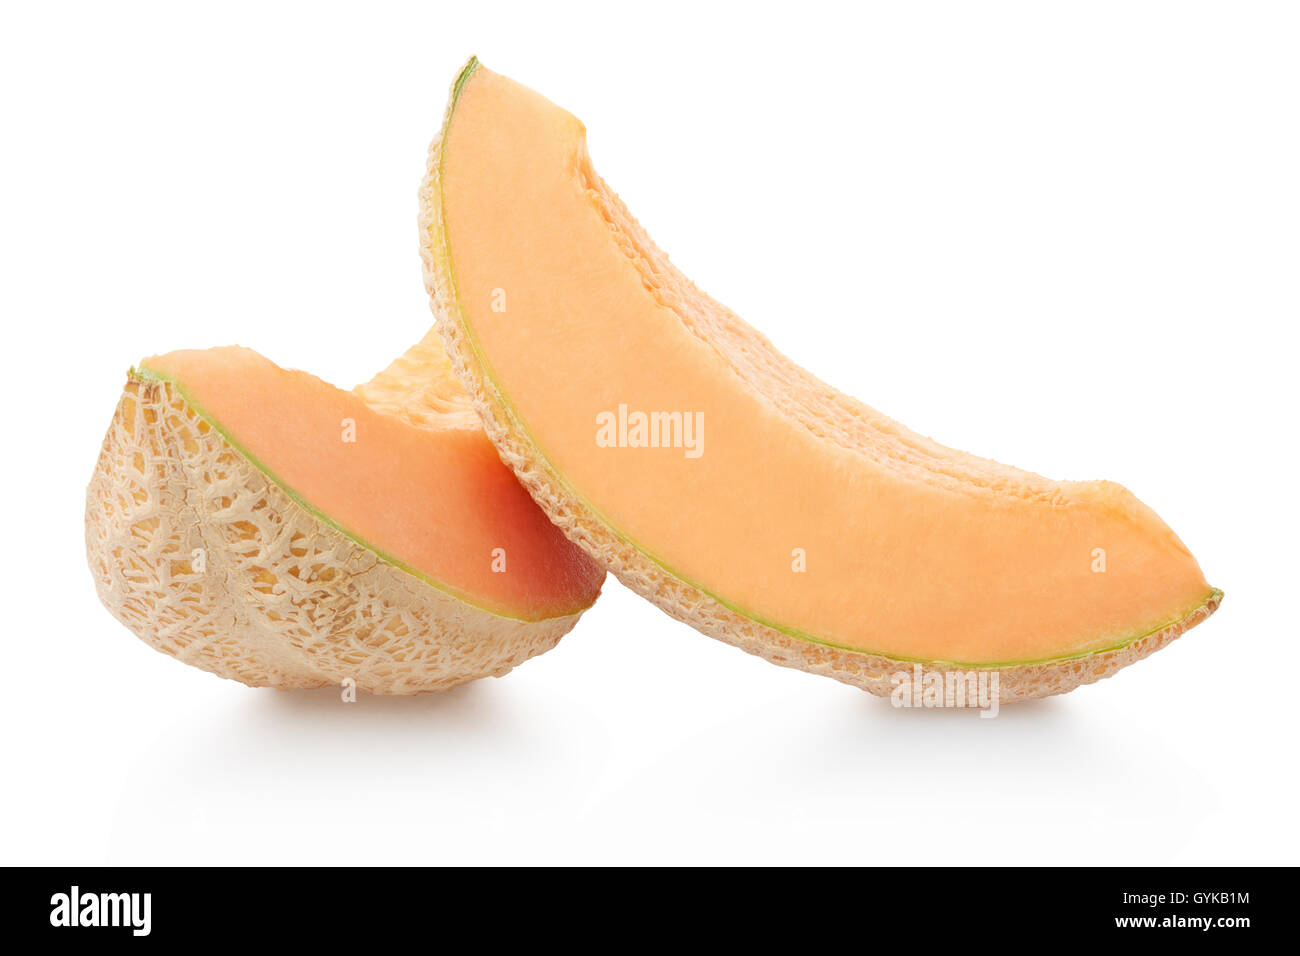 Cantaloupe melon slices on white, clipping path Stock Photo